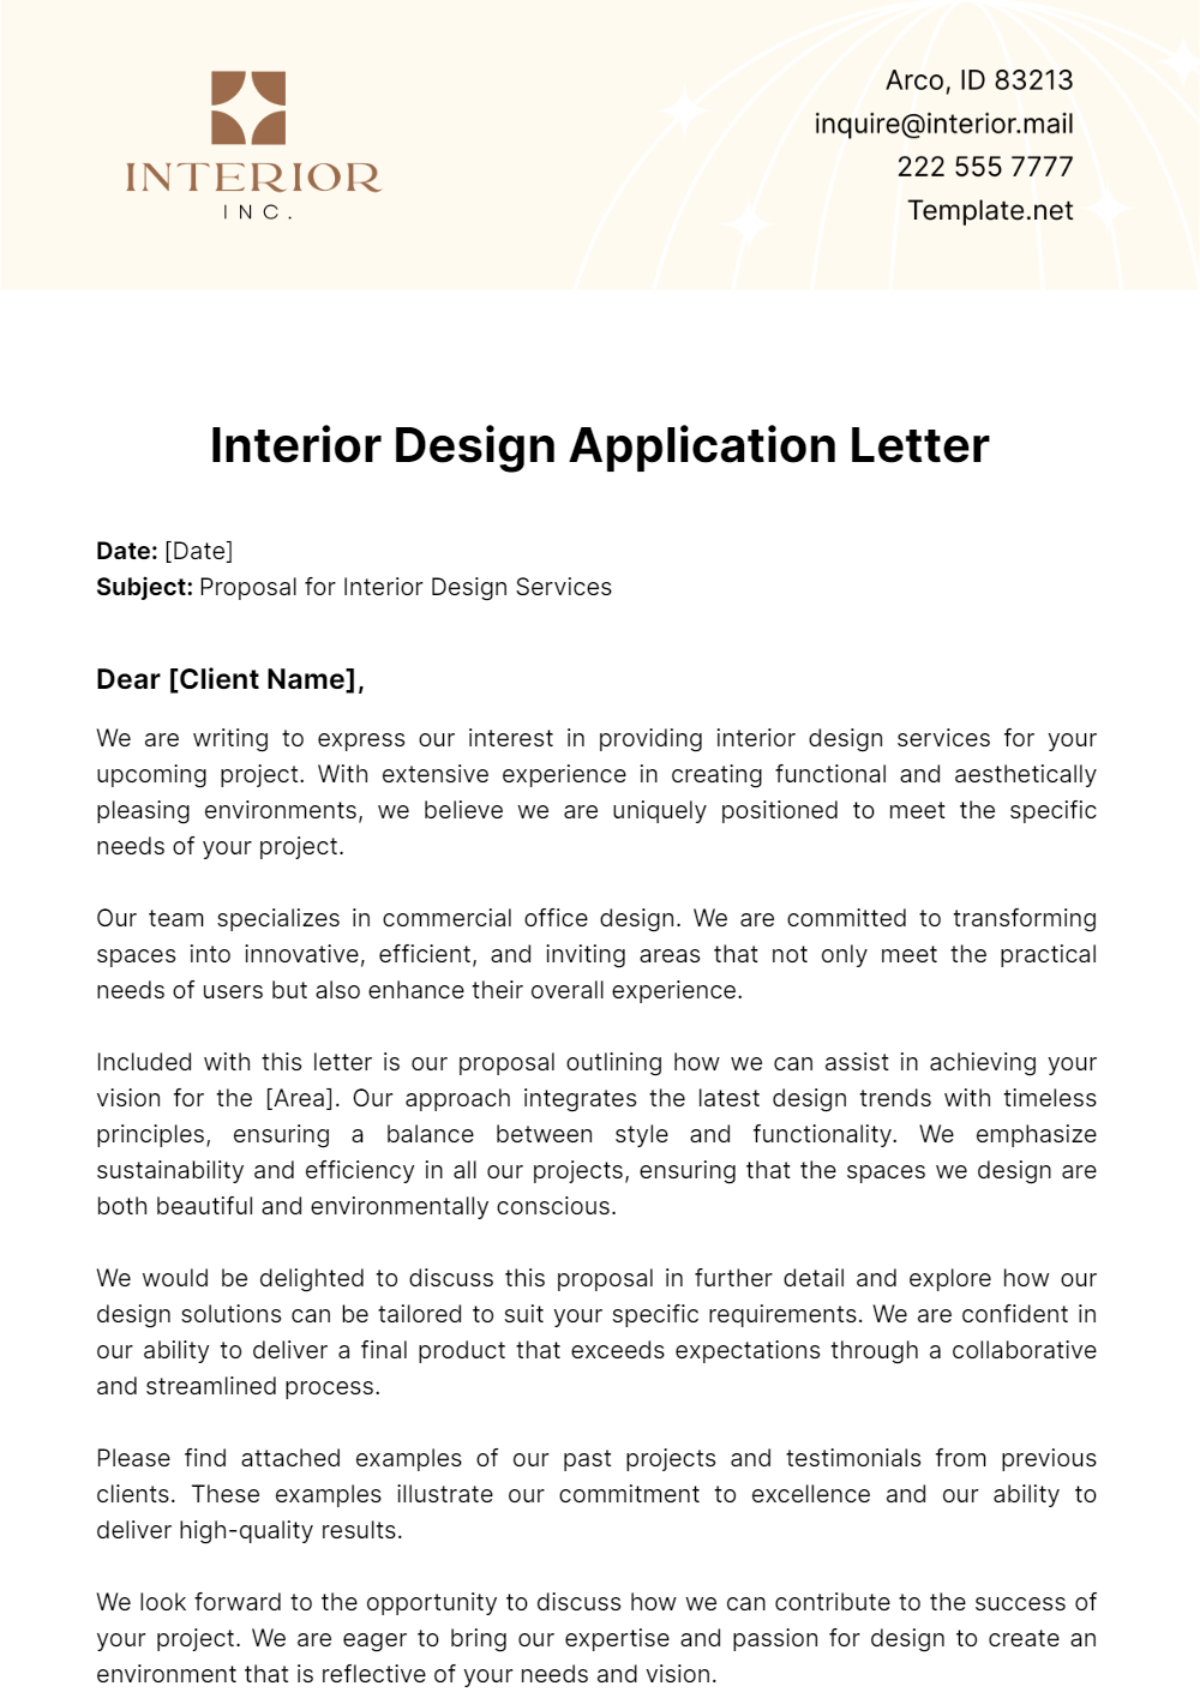 Interior Design Application Letter Template